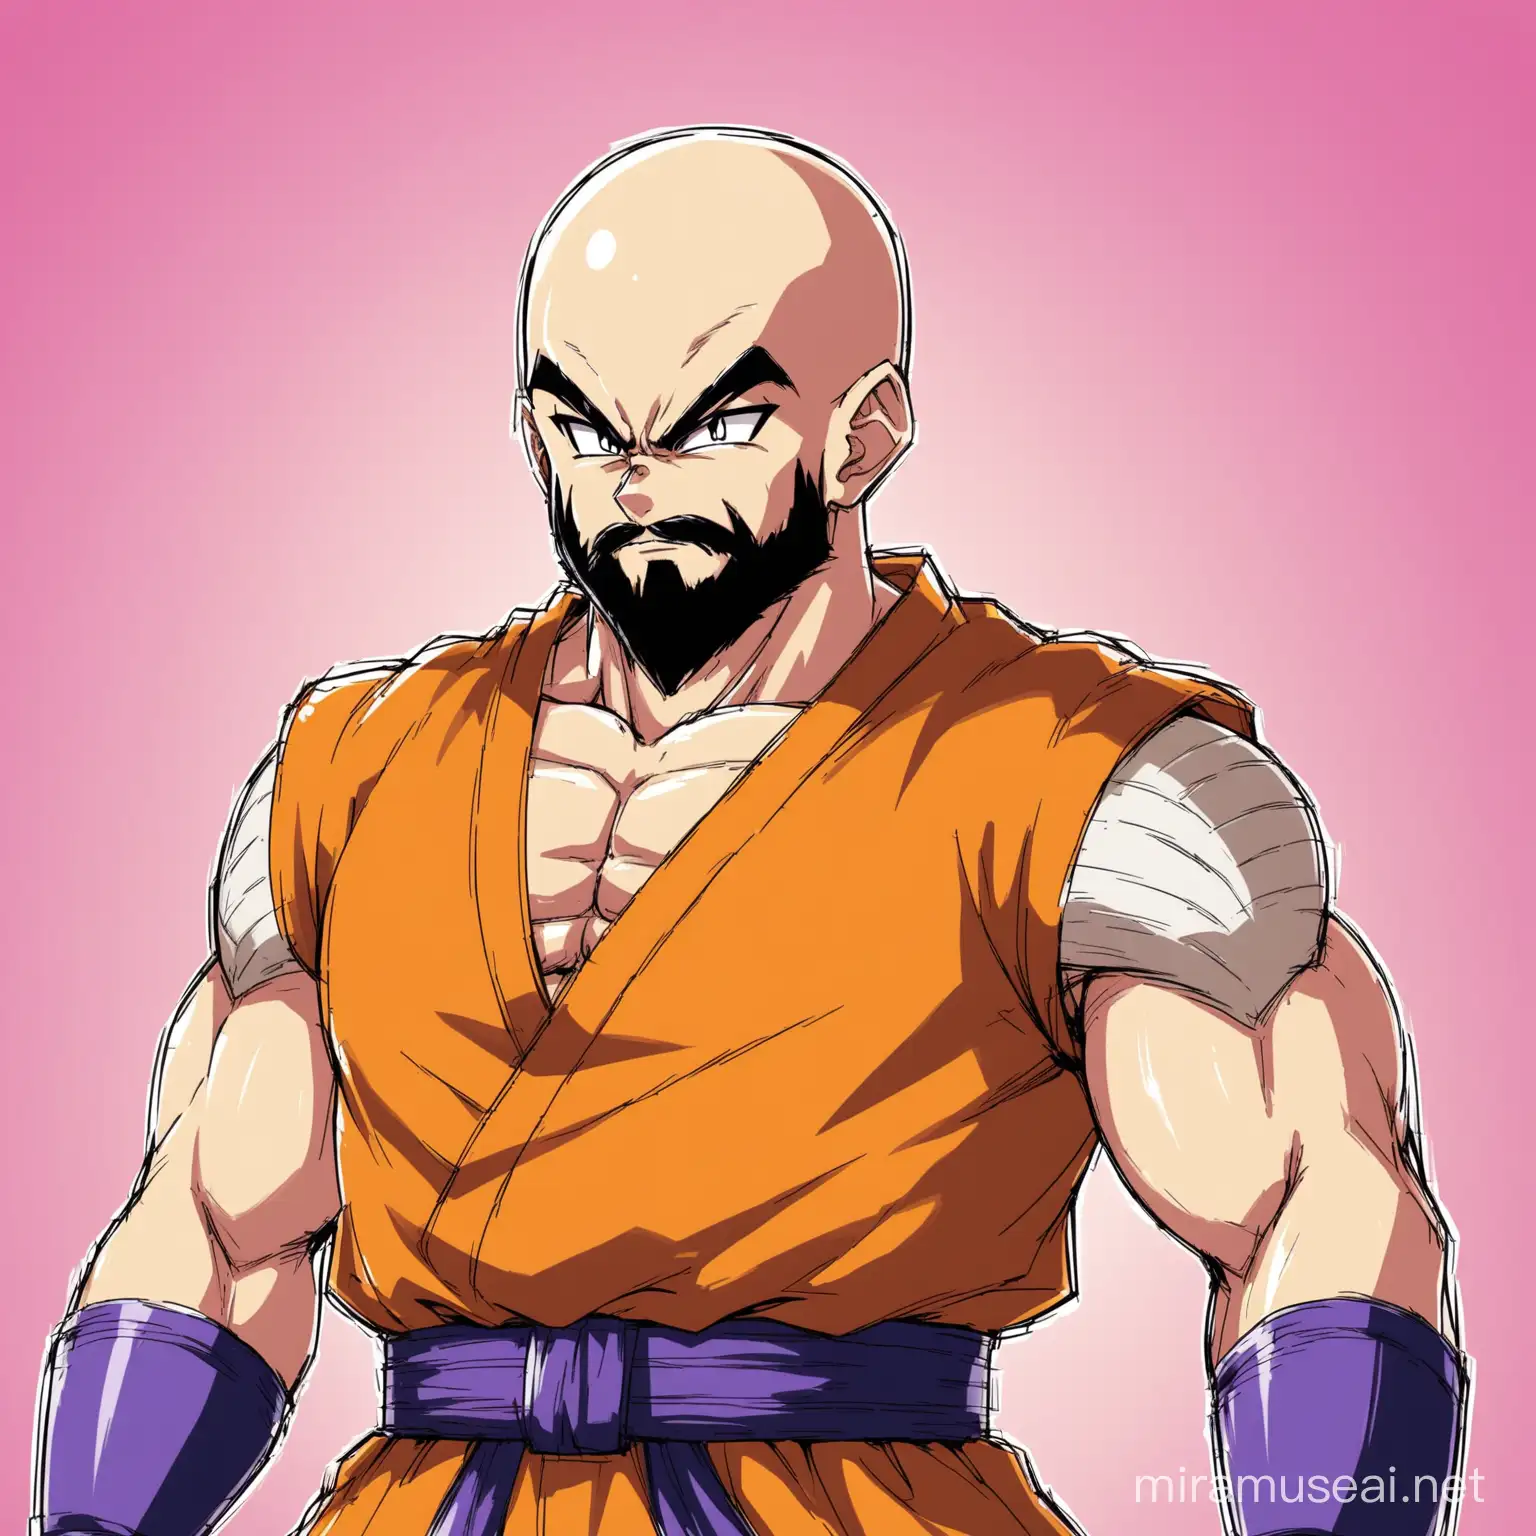 Powerful Bald Bearded Saiyan Warrior Ready for Battle